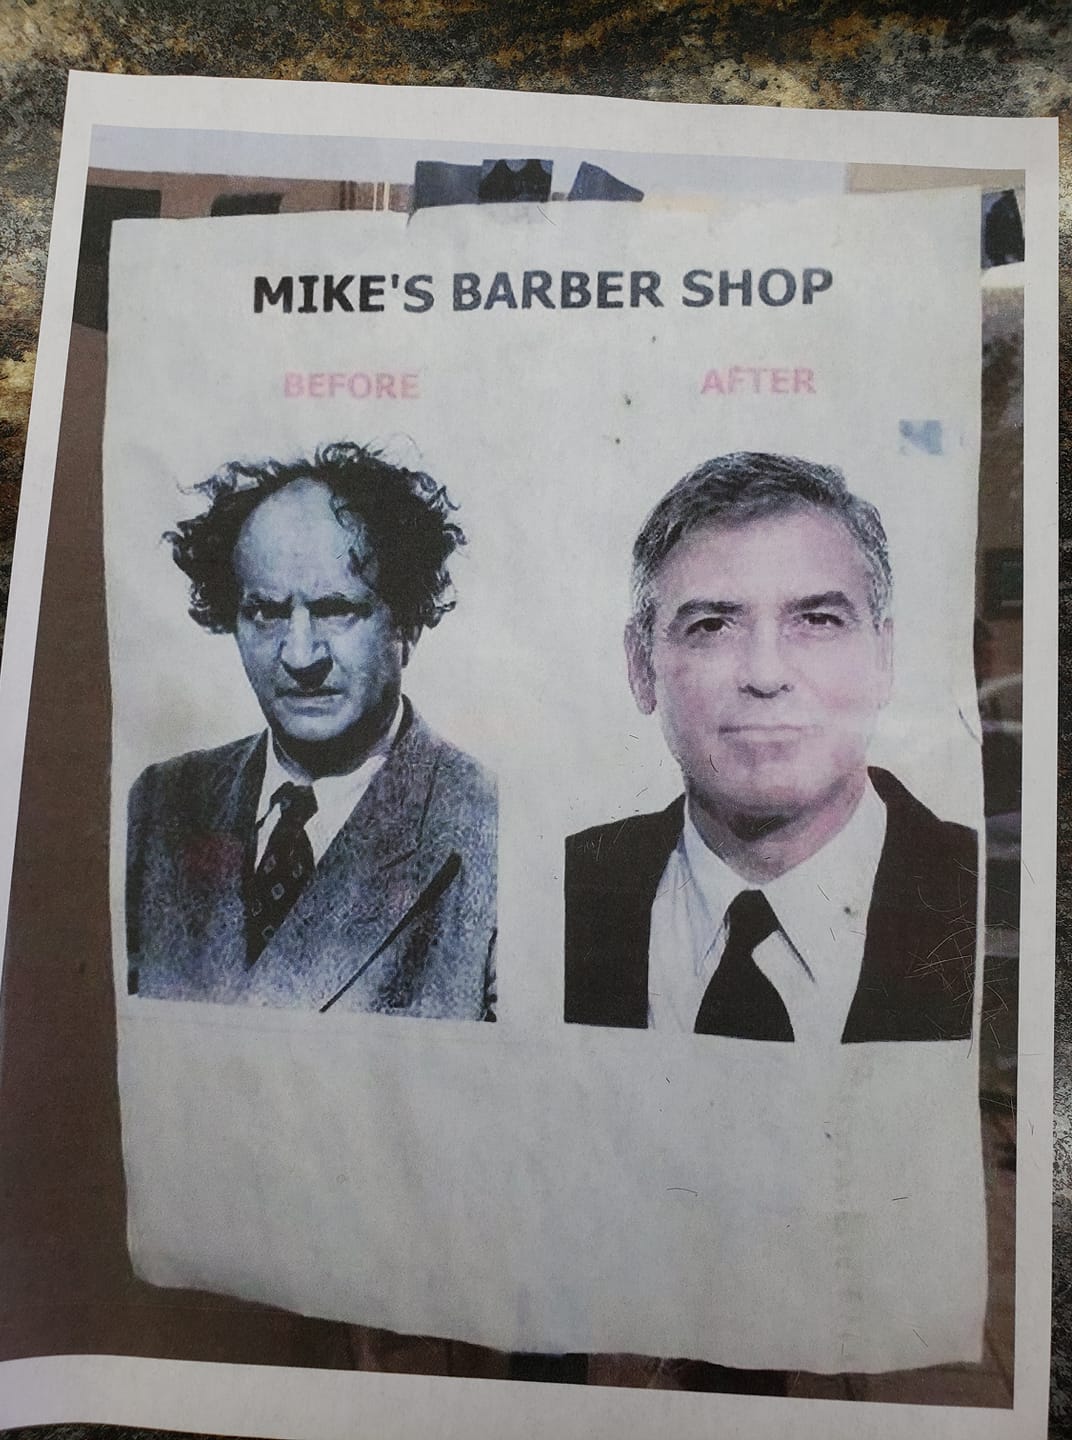 Mike's Barber Shop 1310 S Joshua Ave, Parker Arizona 85344